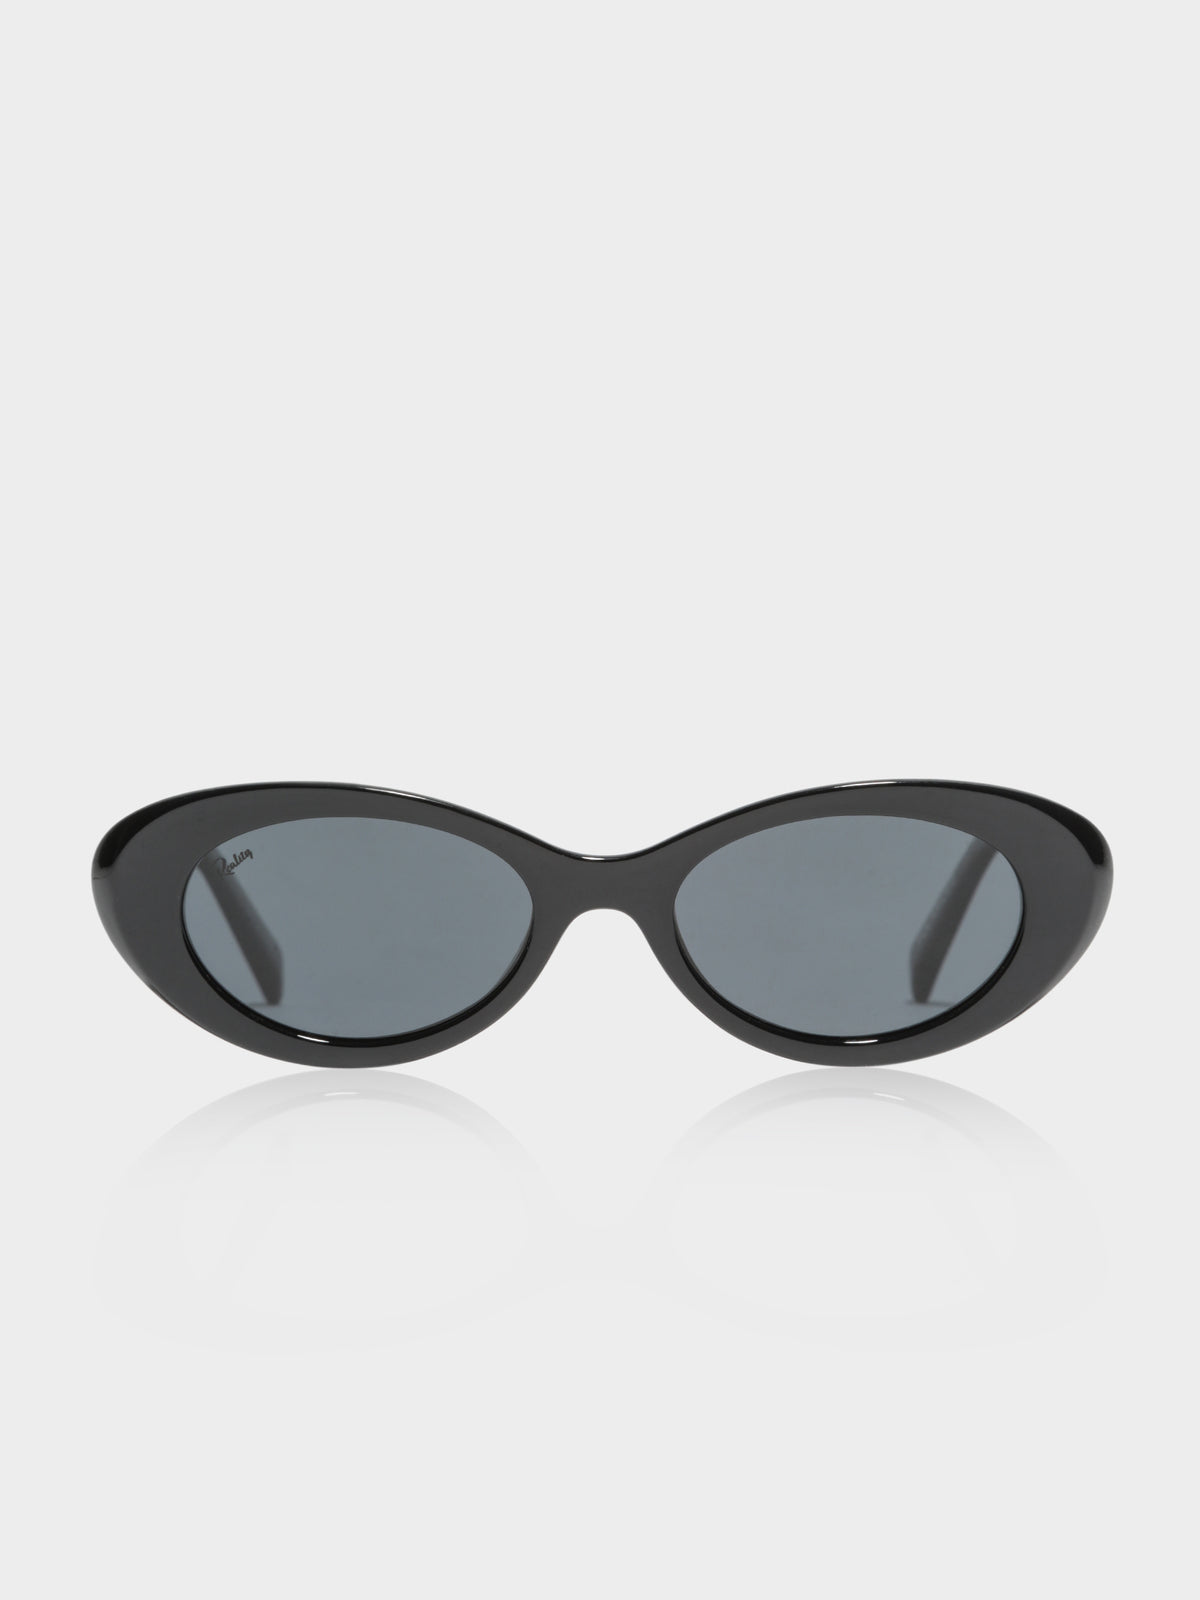 High Society Sunglasses in Black